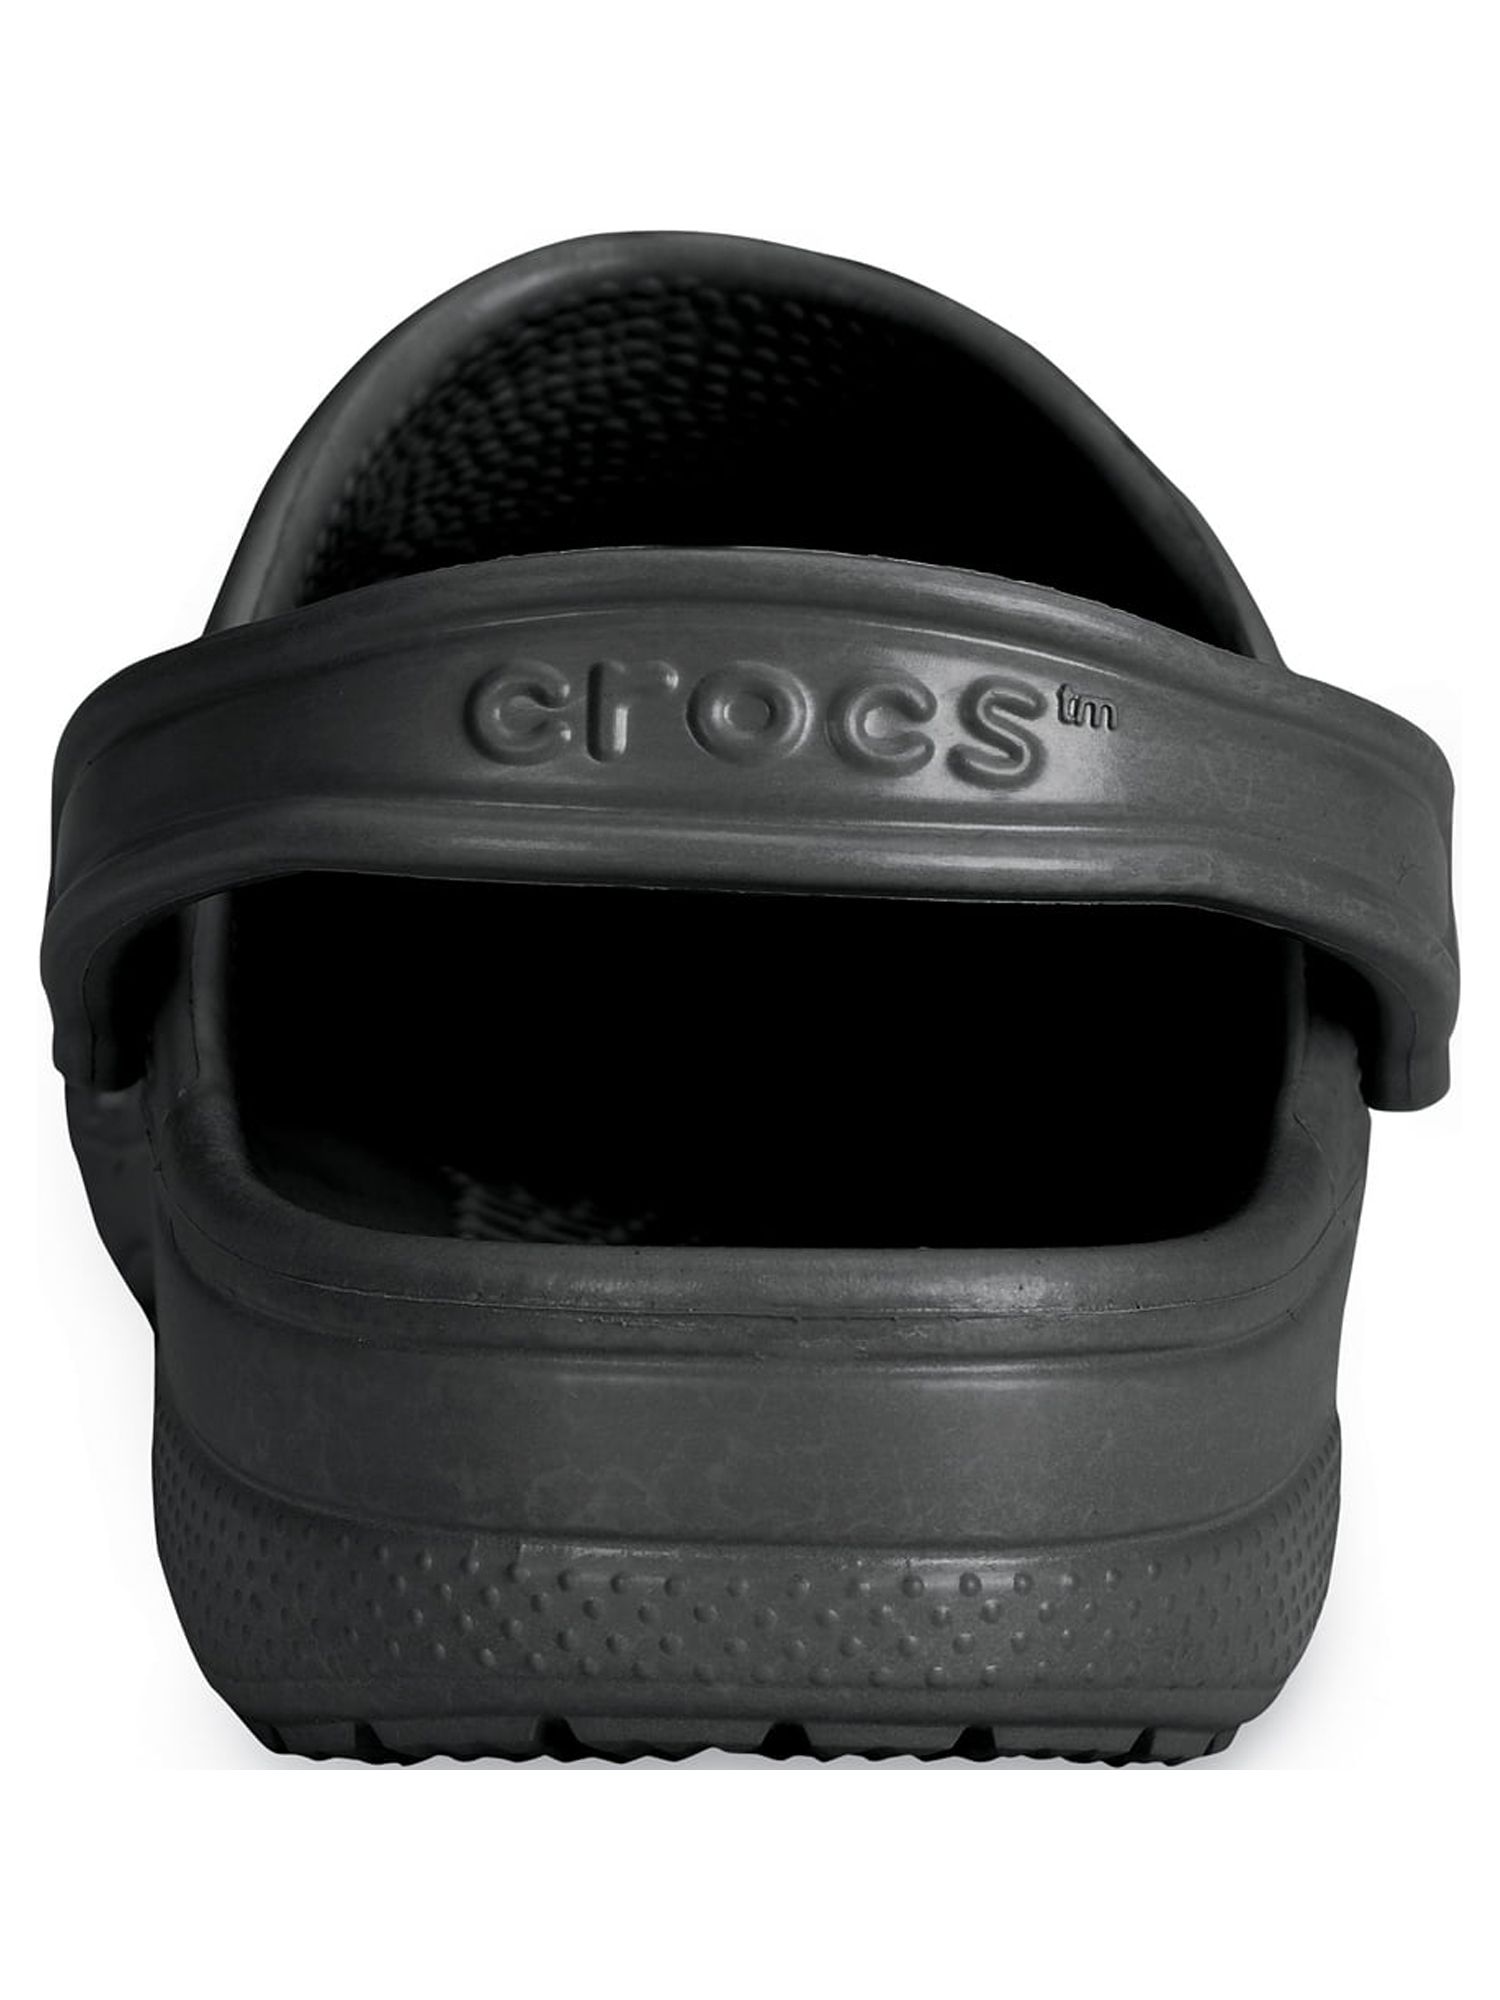 Crocs Men's and Women's Unisex Baya Clog Sandals - image 3 of 5